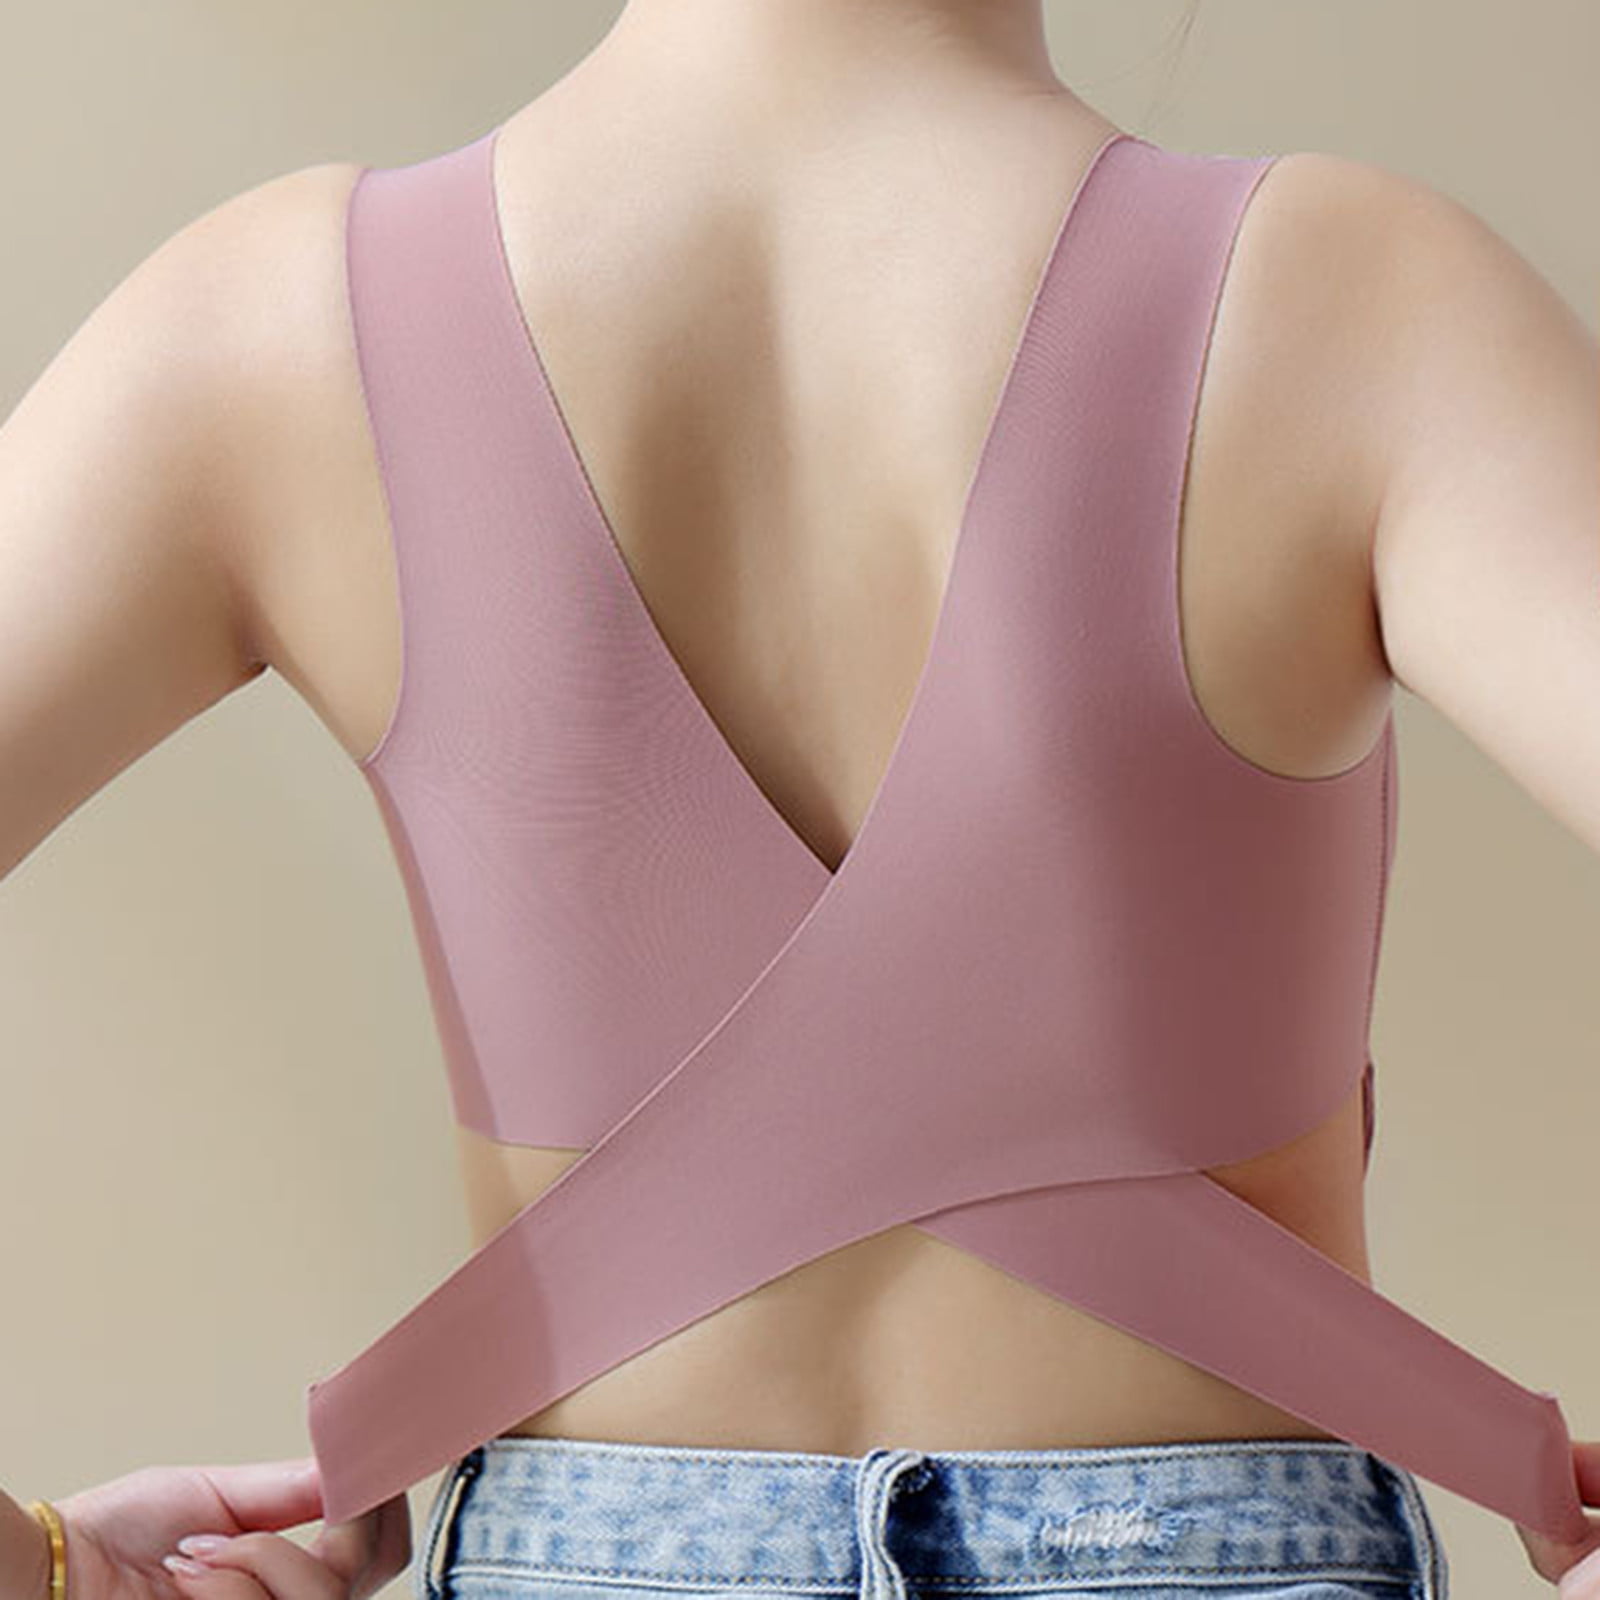 kpoplk Push Up Bras For Women,No Wire Plus Size Full Coverage Unpadded  Comfortable Women's Bra(Pink) 